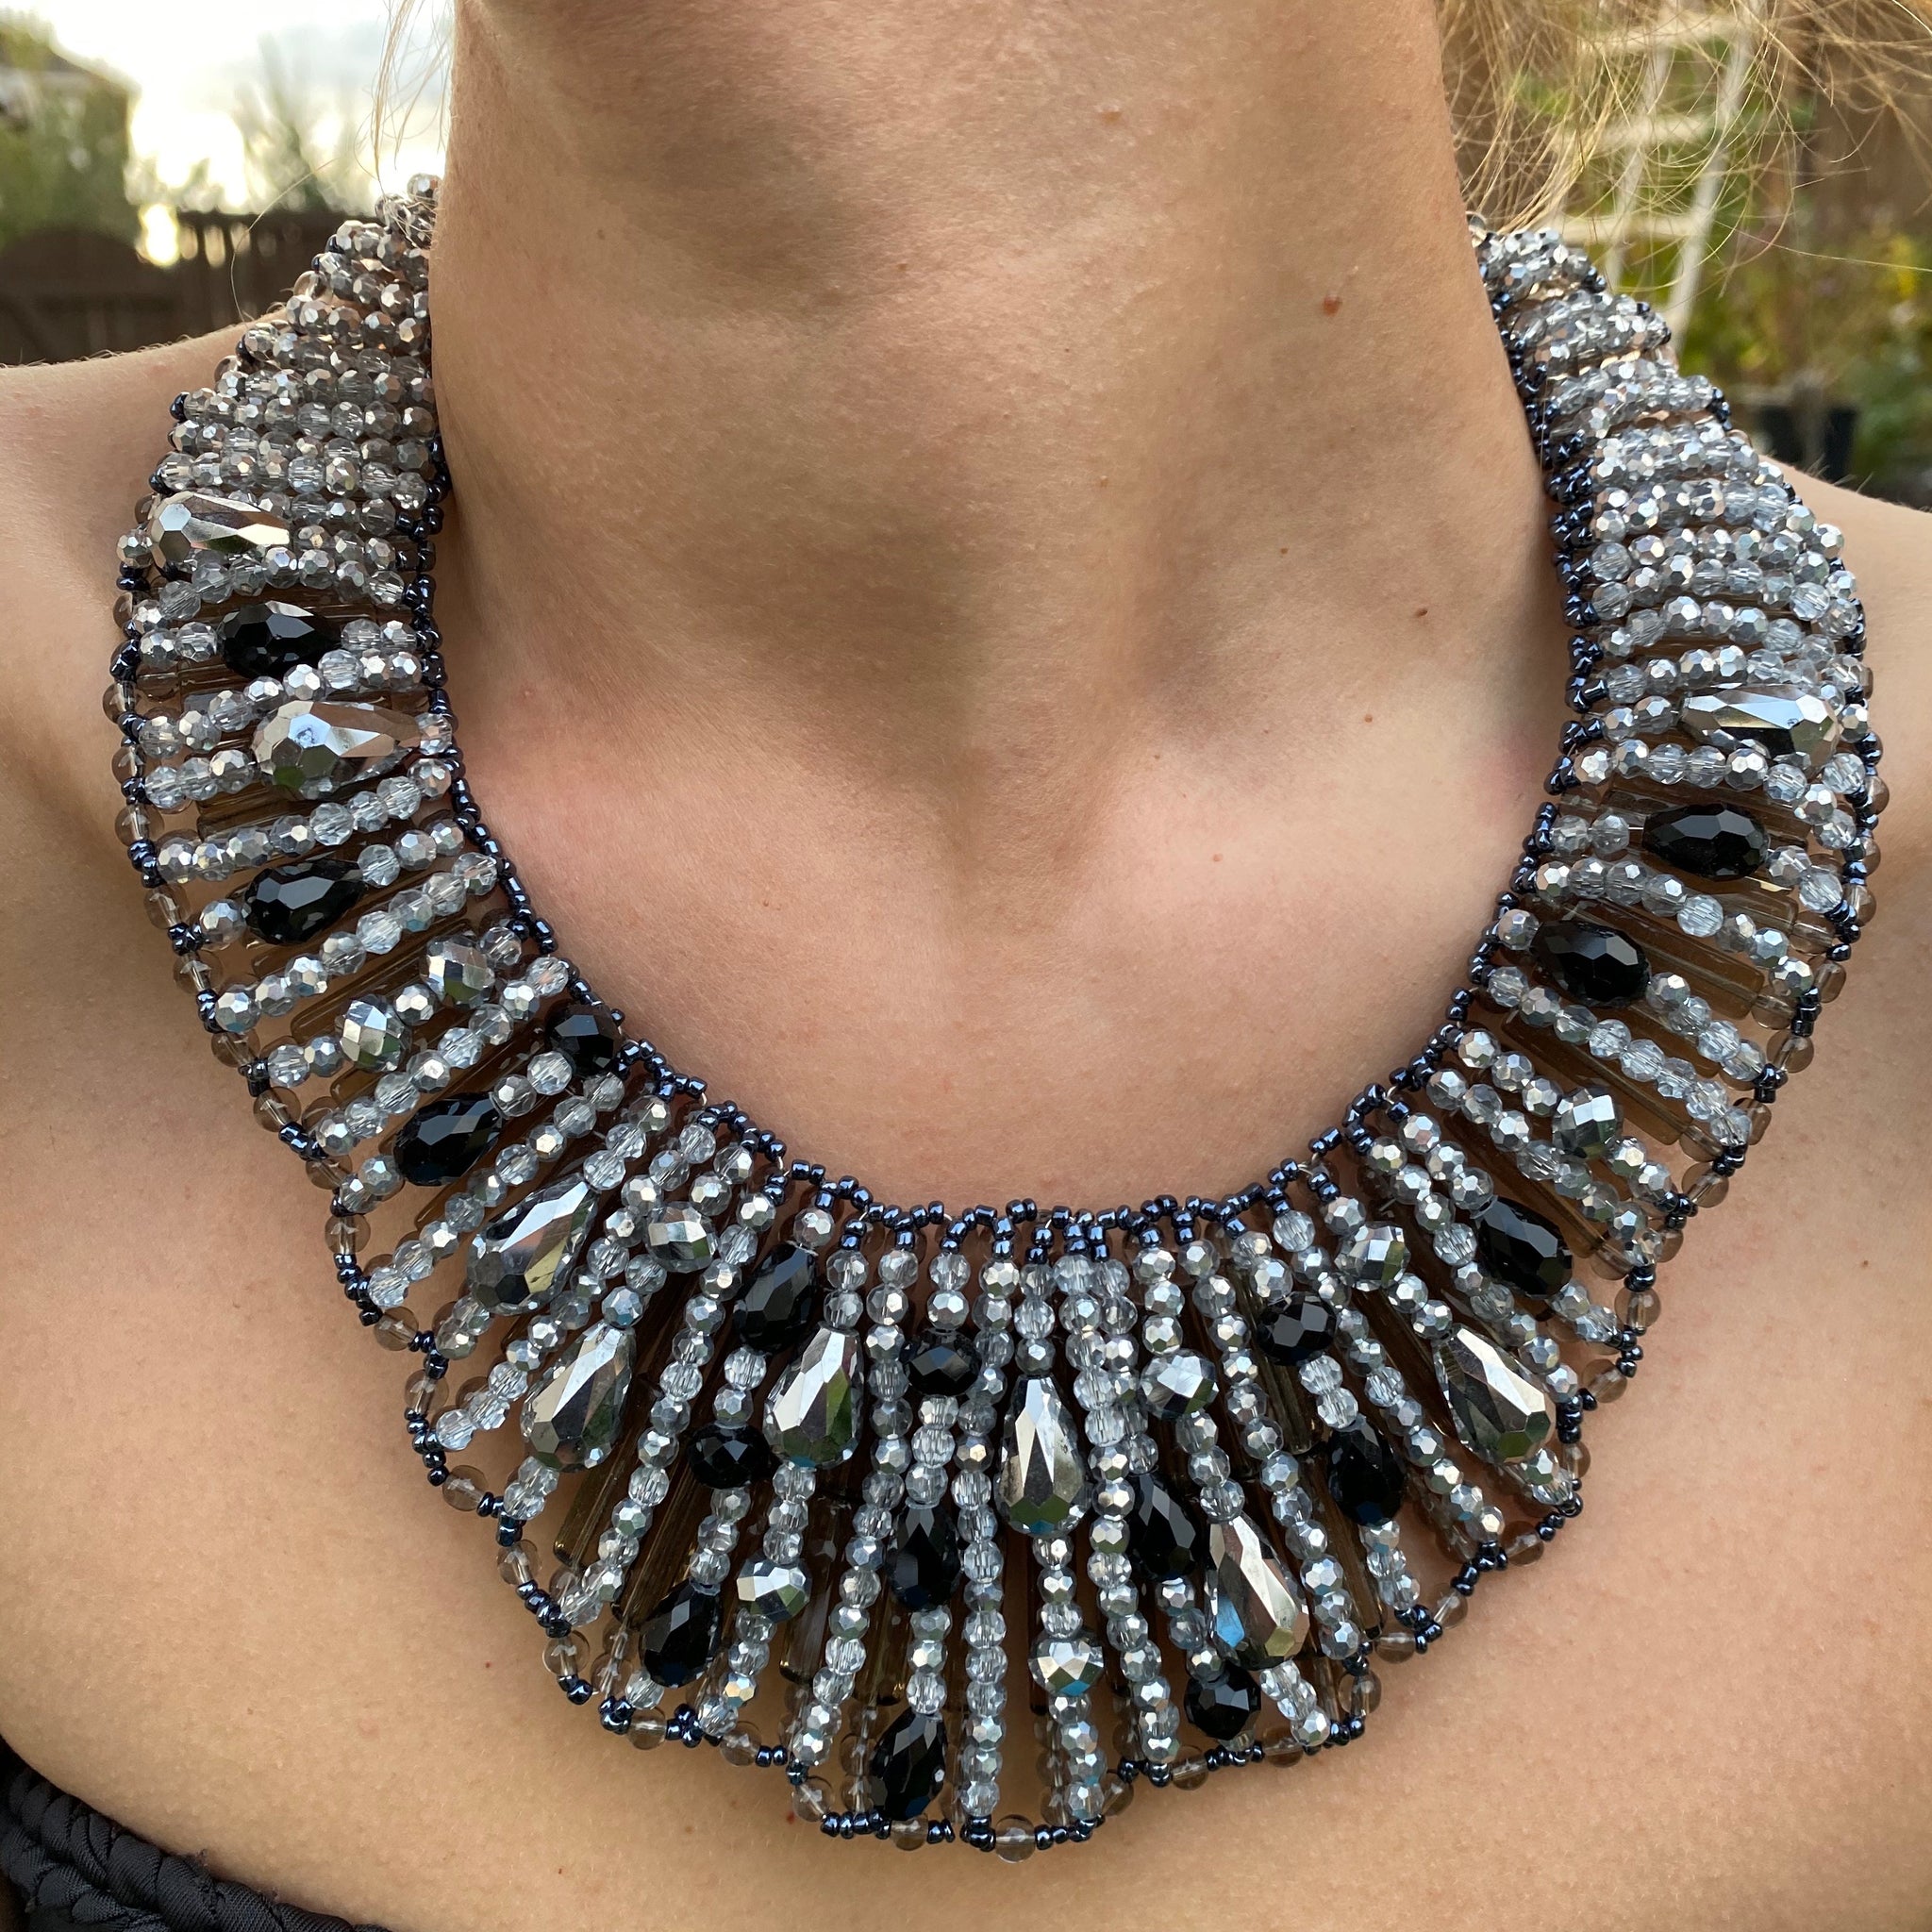 Handmade Necklace 20" Metallic Black Grey Beads Glitzy Collar Wrap Choker